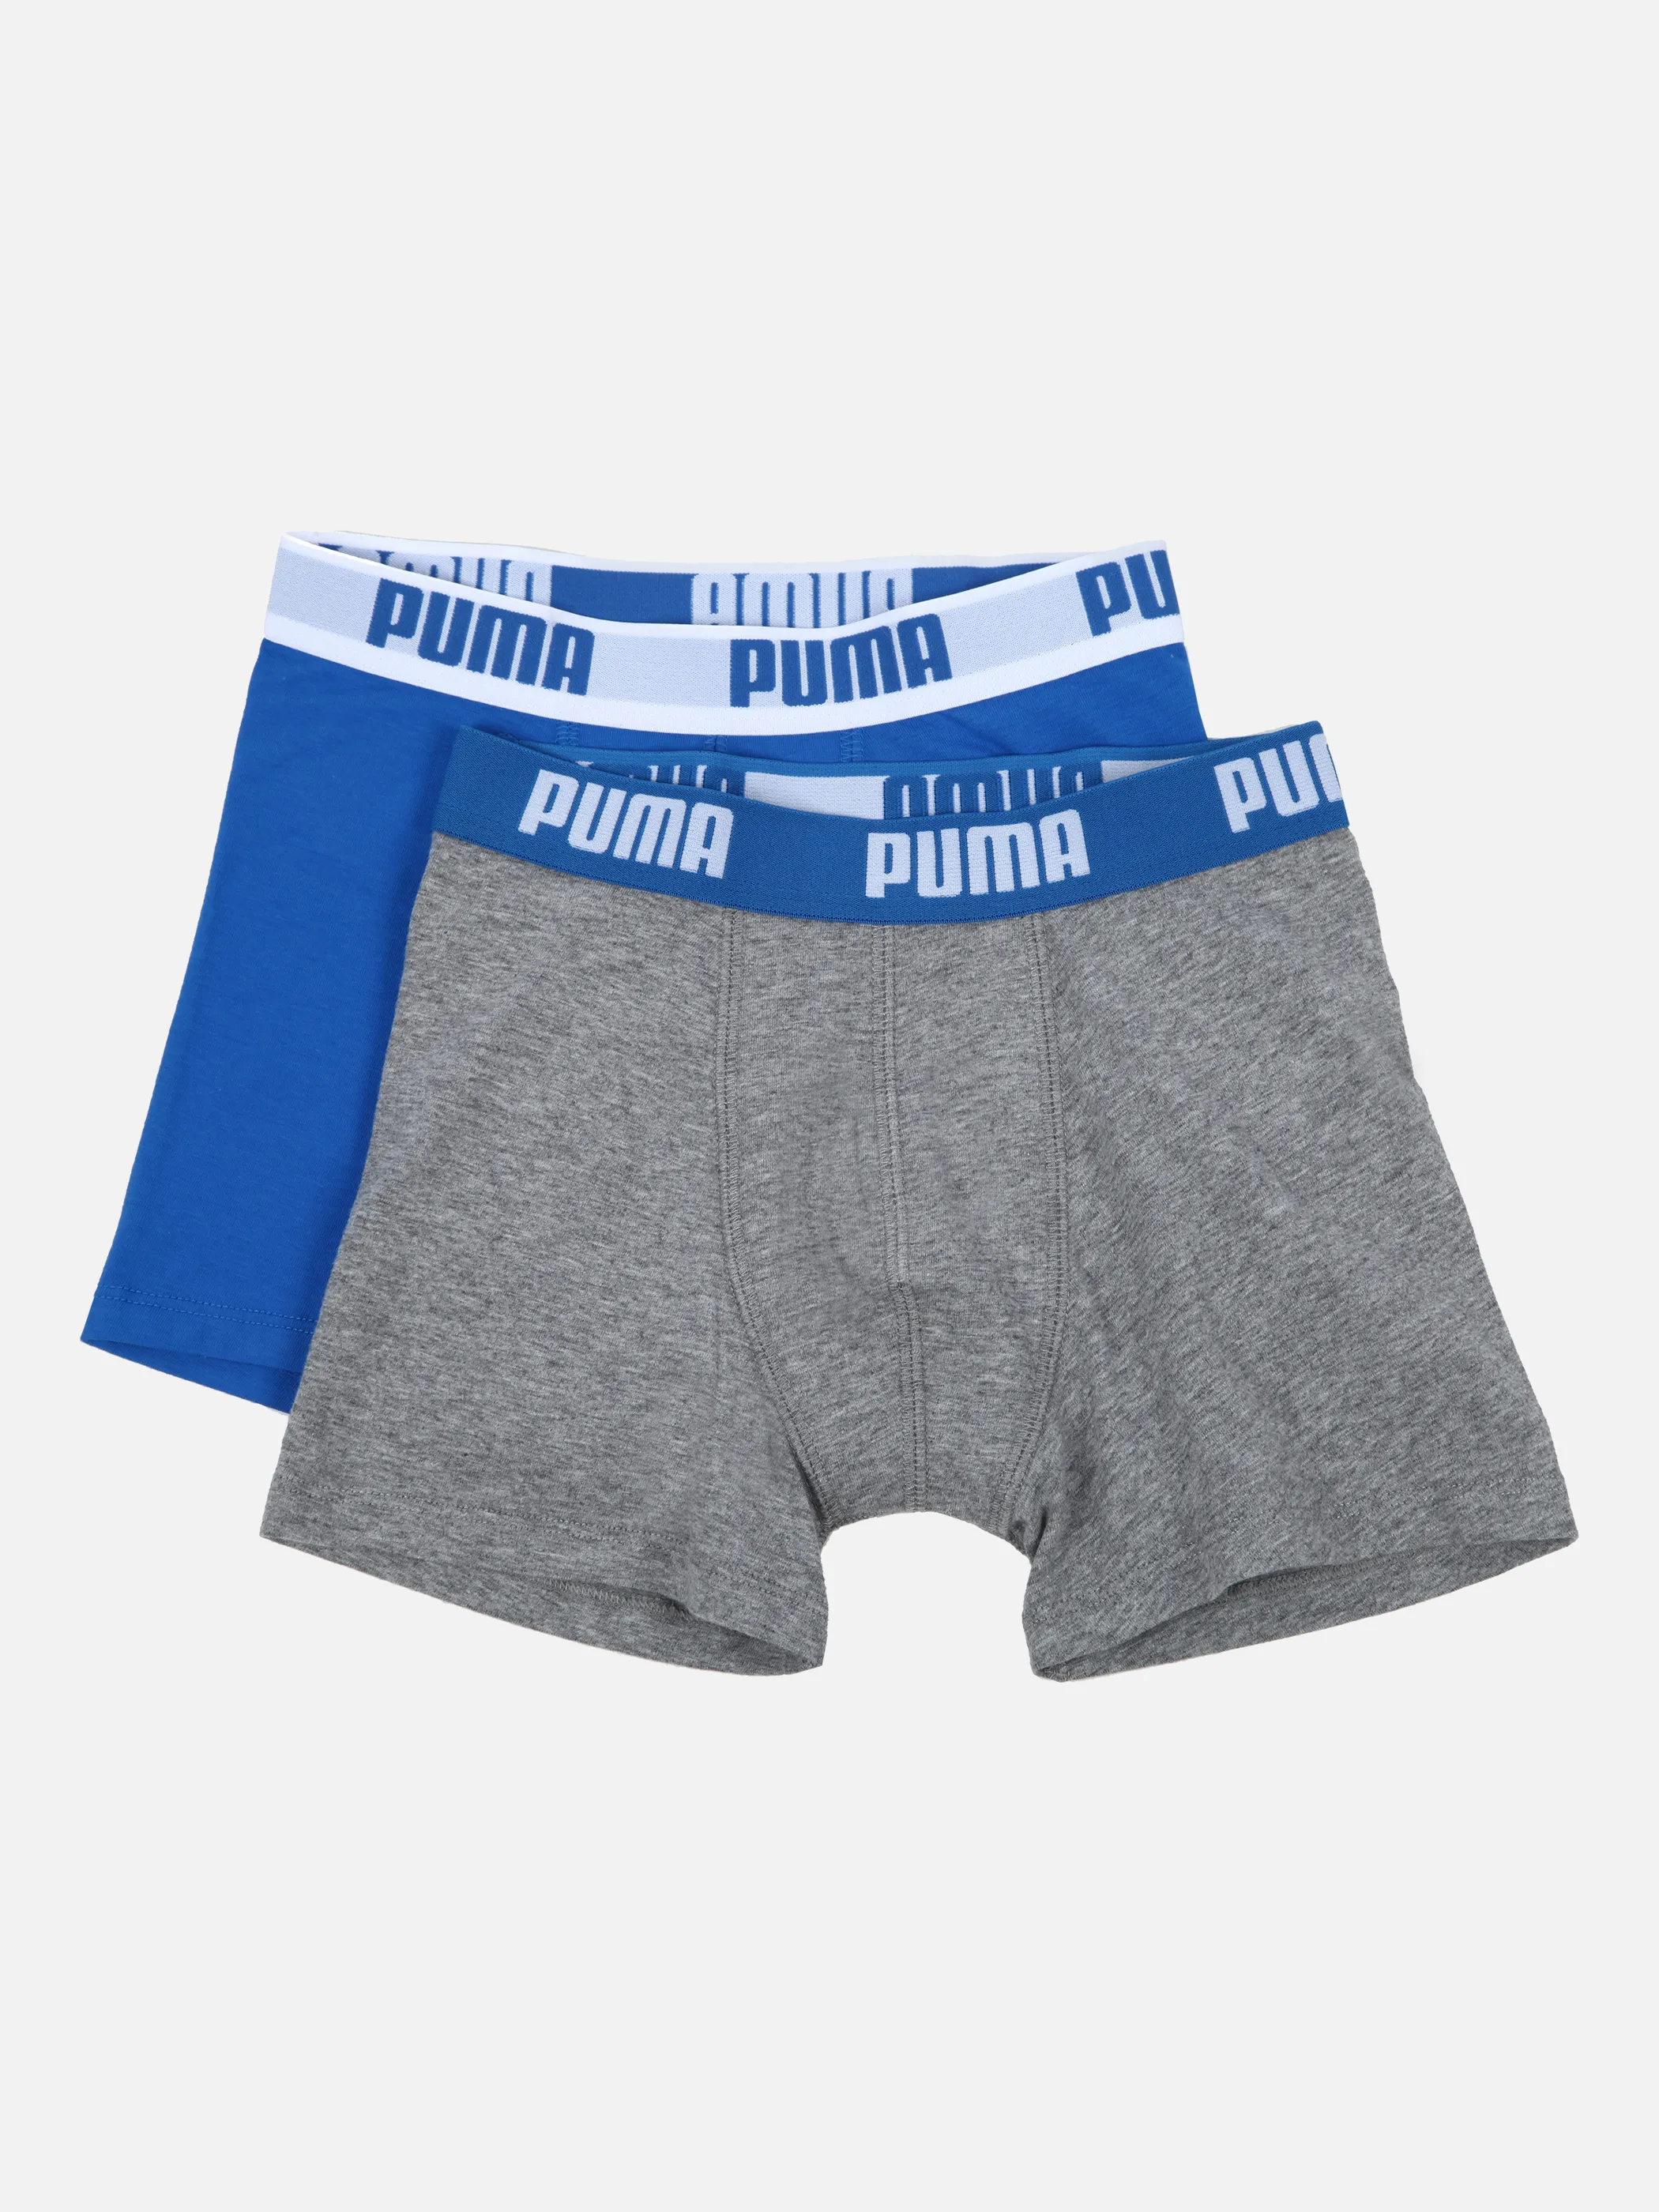 Puma Kn-PUMA BASIC BOXER 2er Pack Blau 834192 417 1